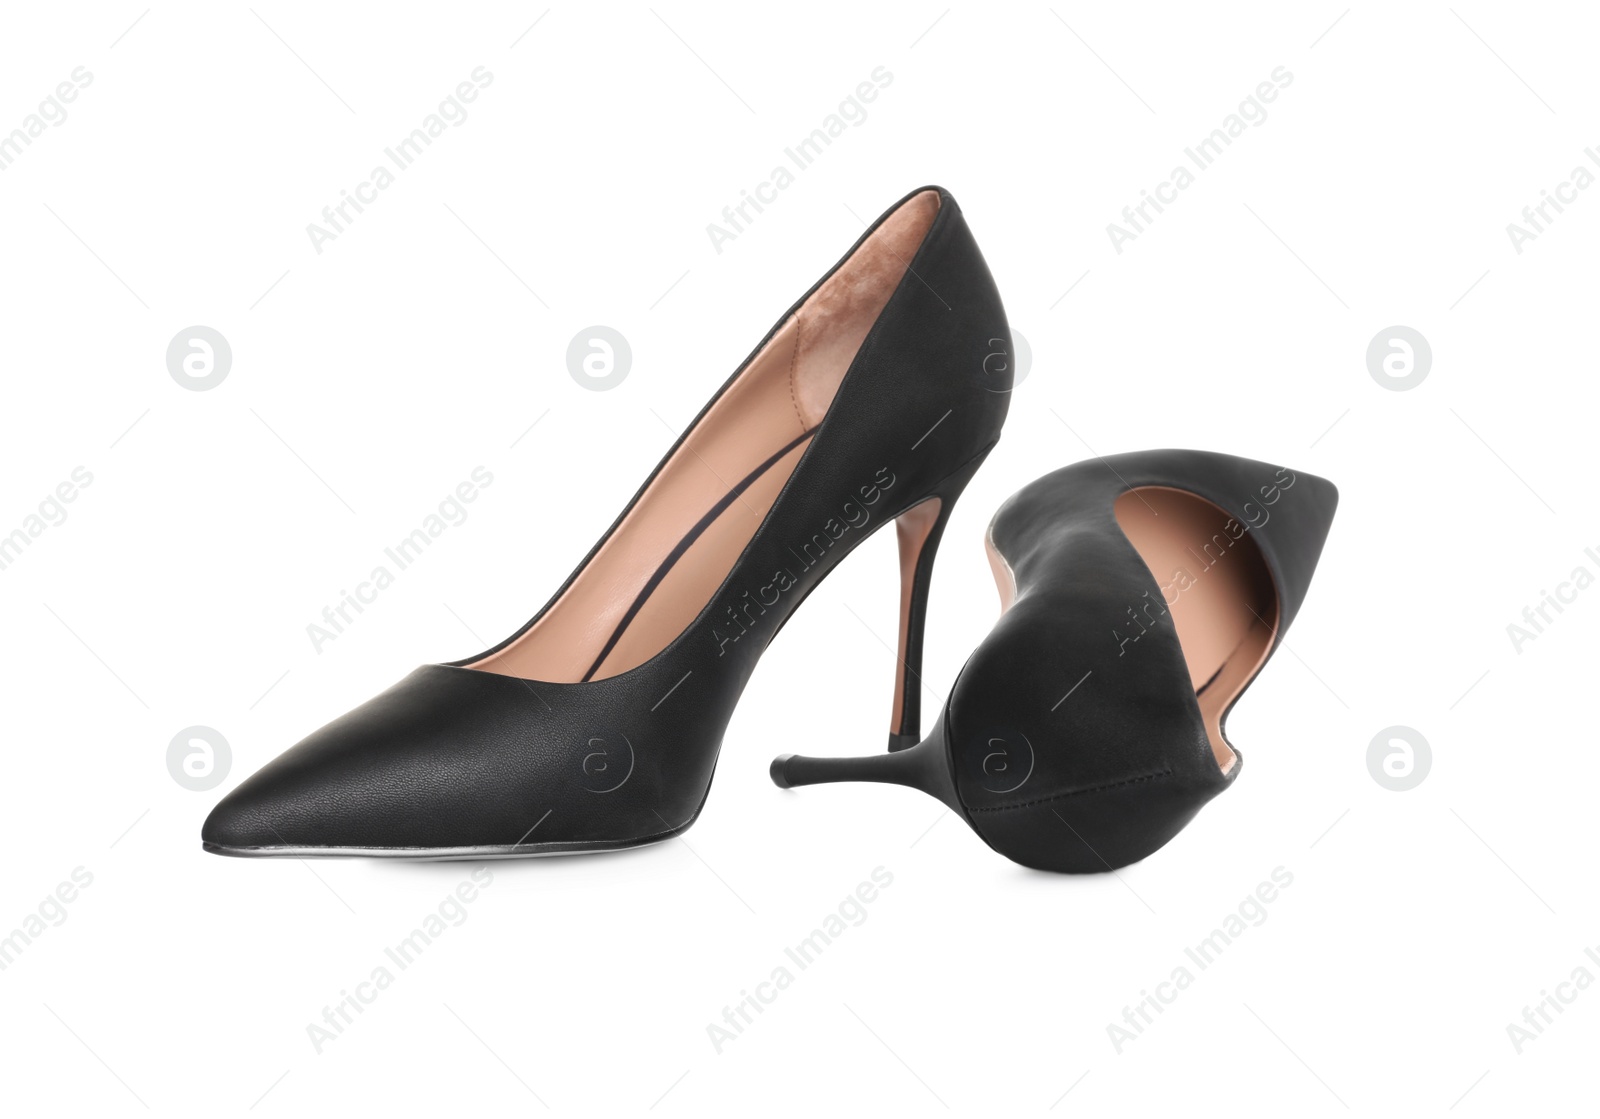 Photo of Pair of elegant black high heel shoes on white background